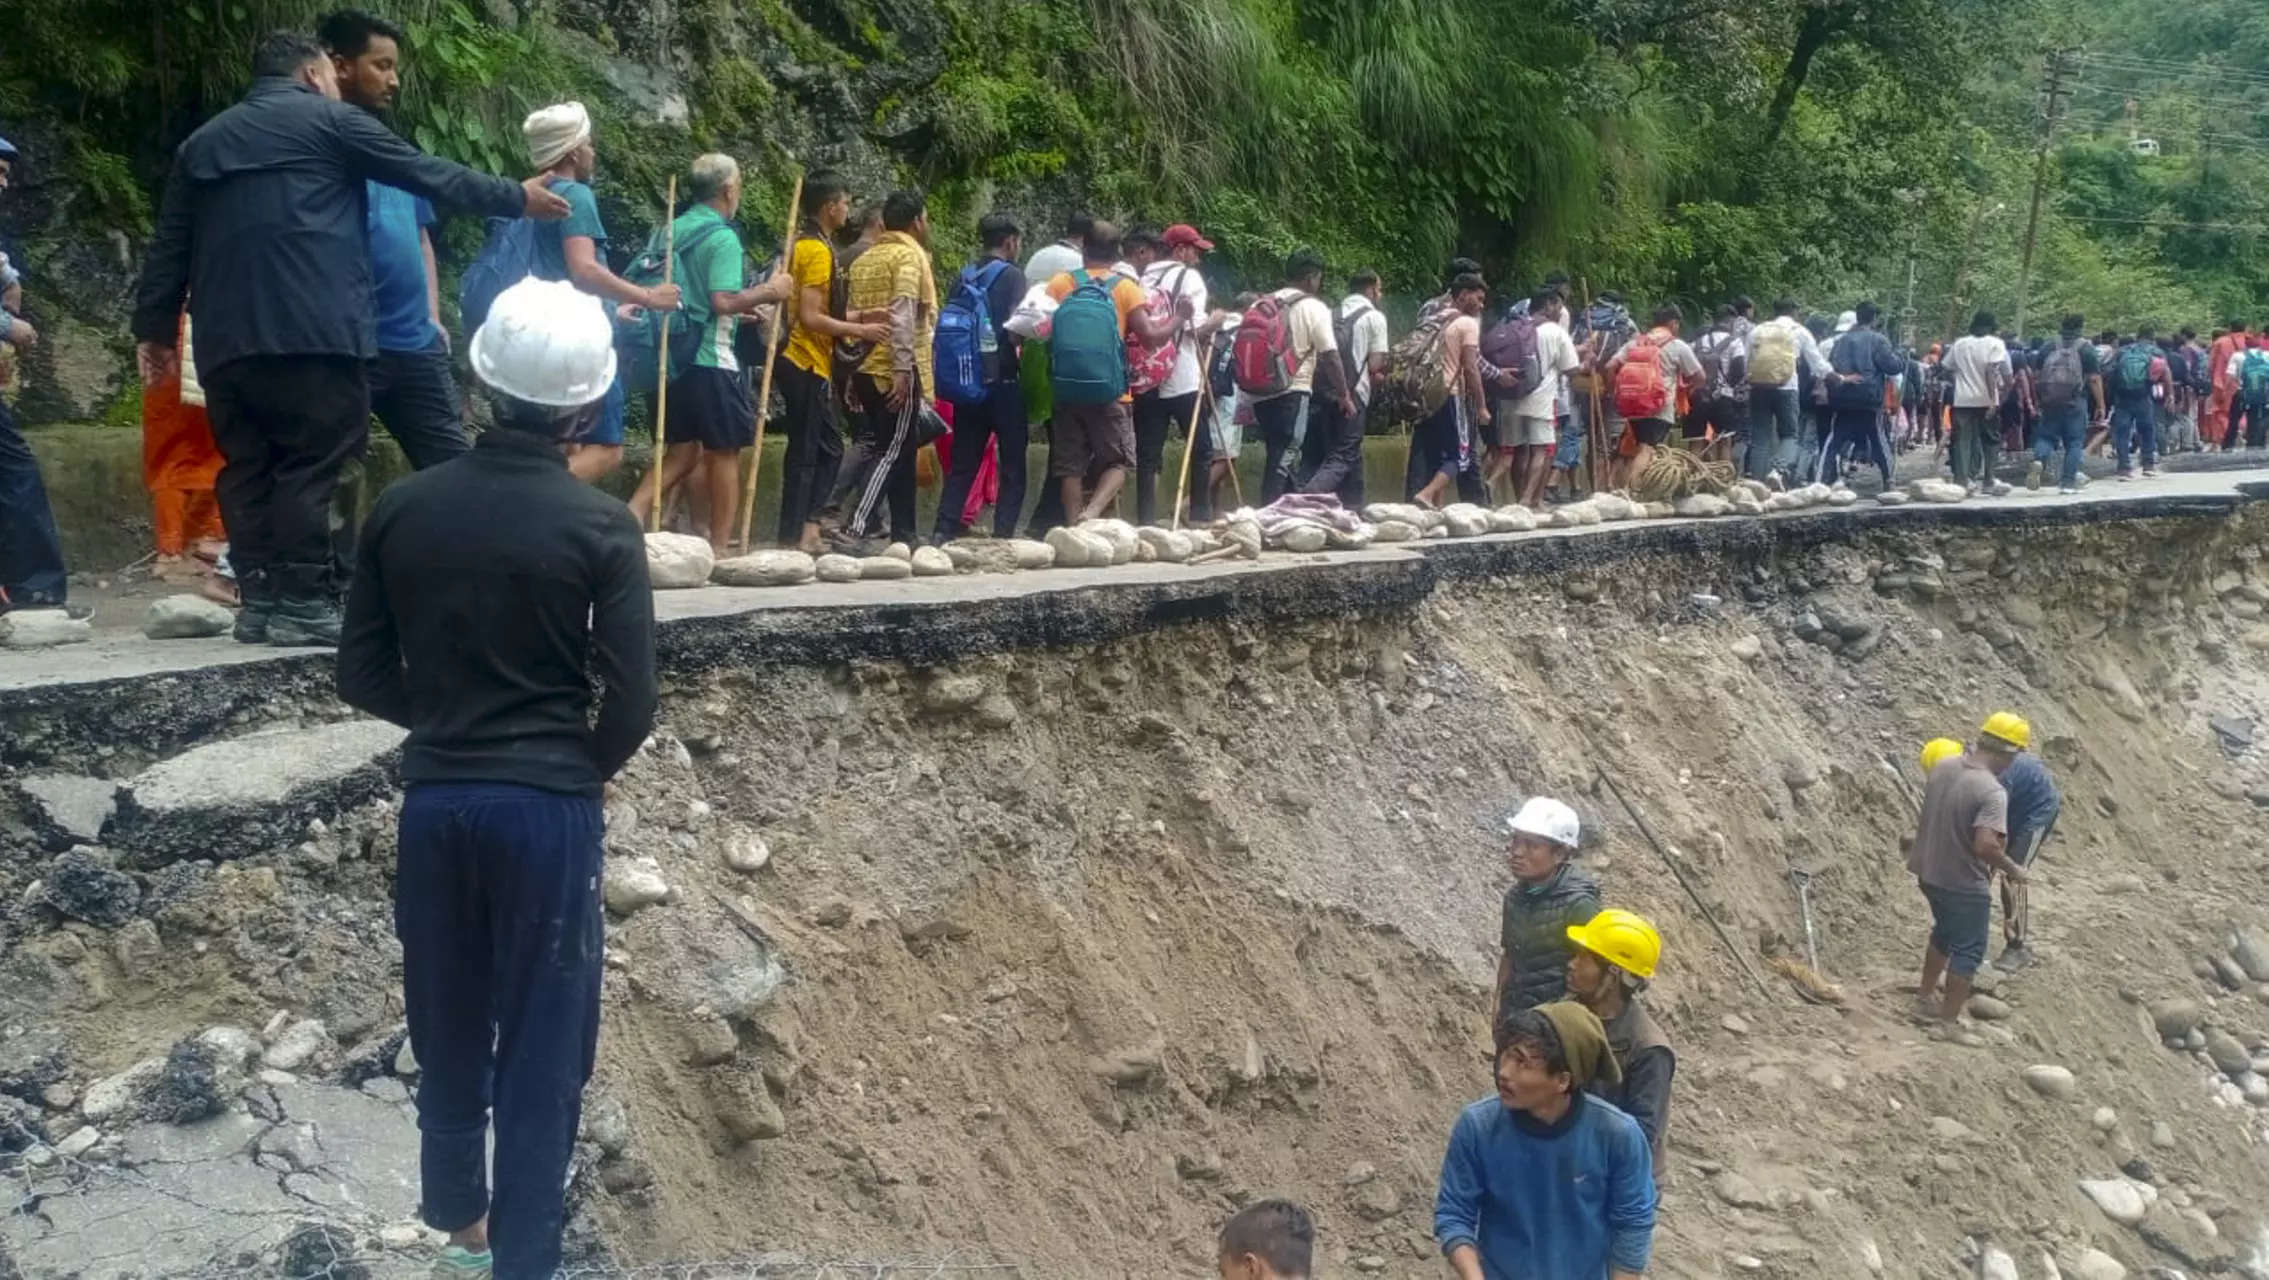 Uttarakhand Rains: Over 700 people stranded on Kedarnath route evacuated, rescue operation underway 